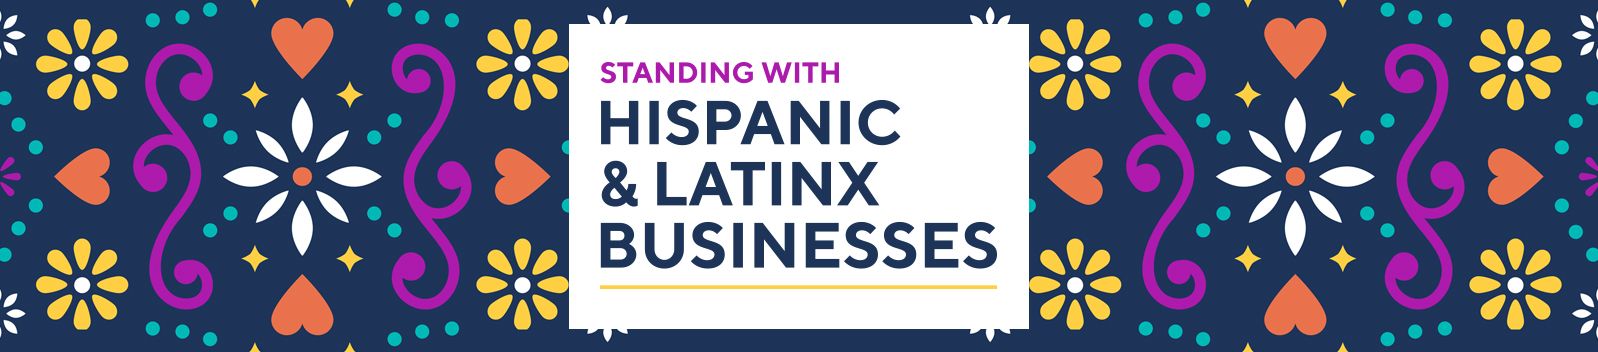 Standing with Hispanic & Latinx Businesses